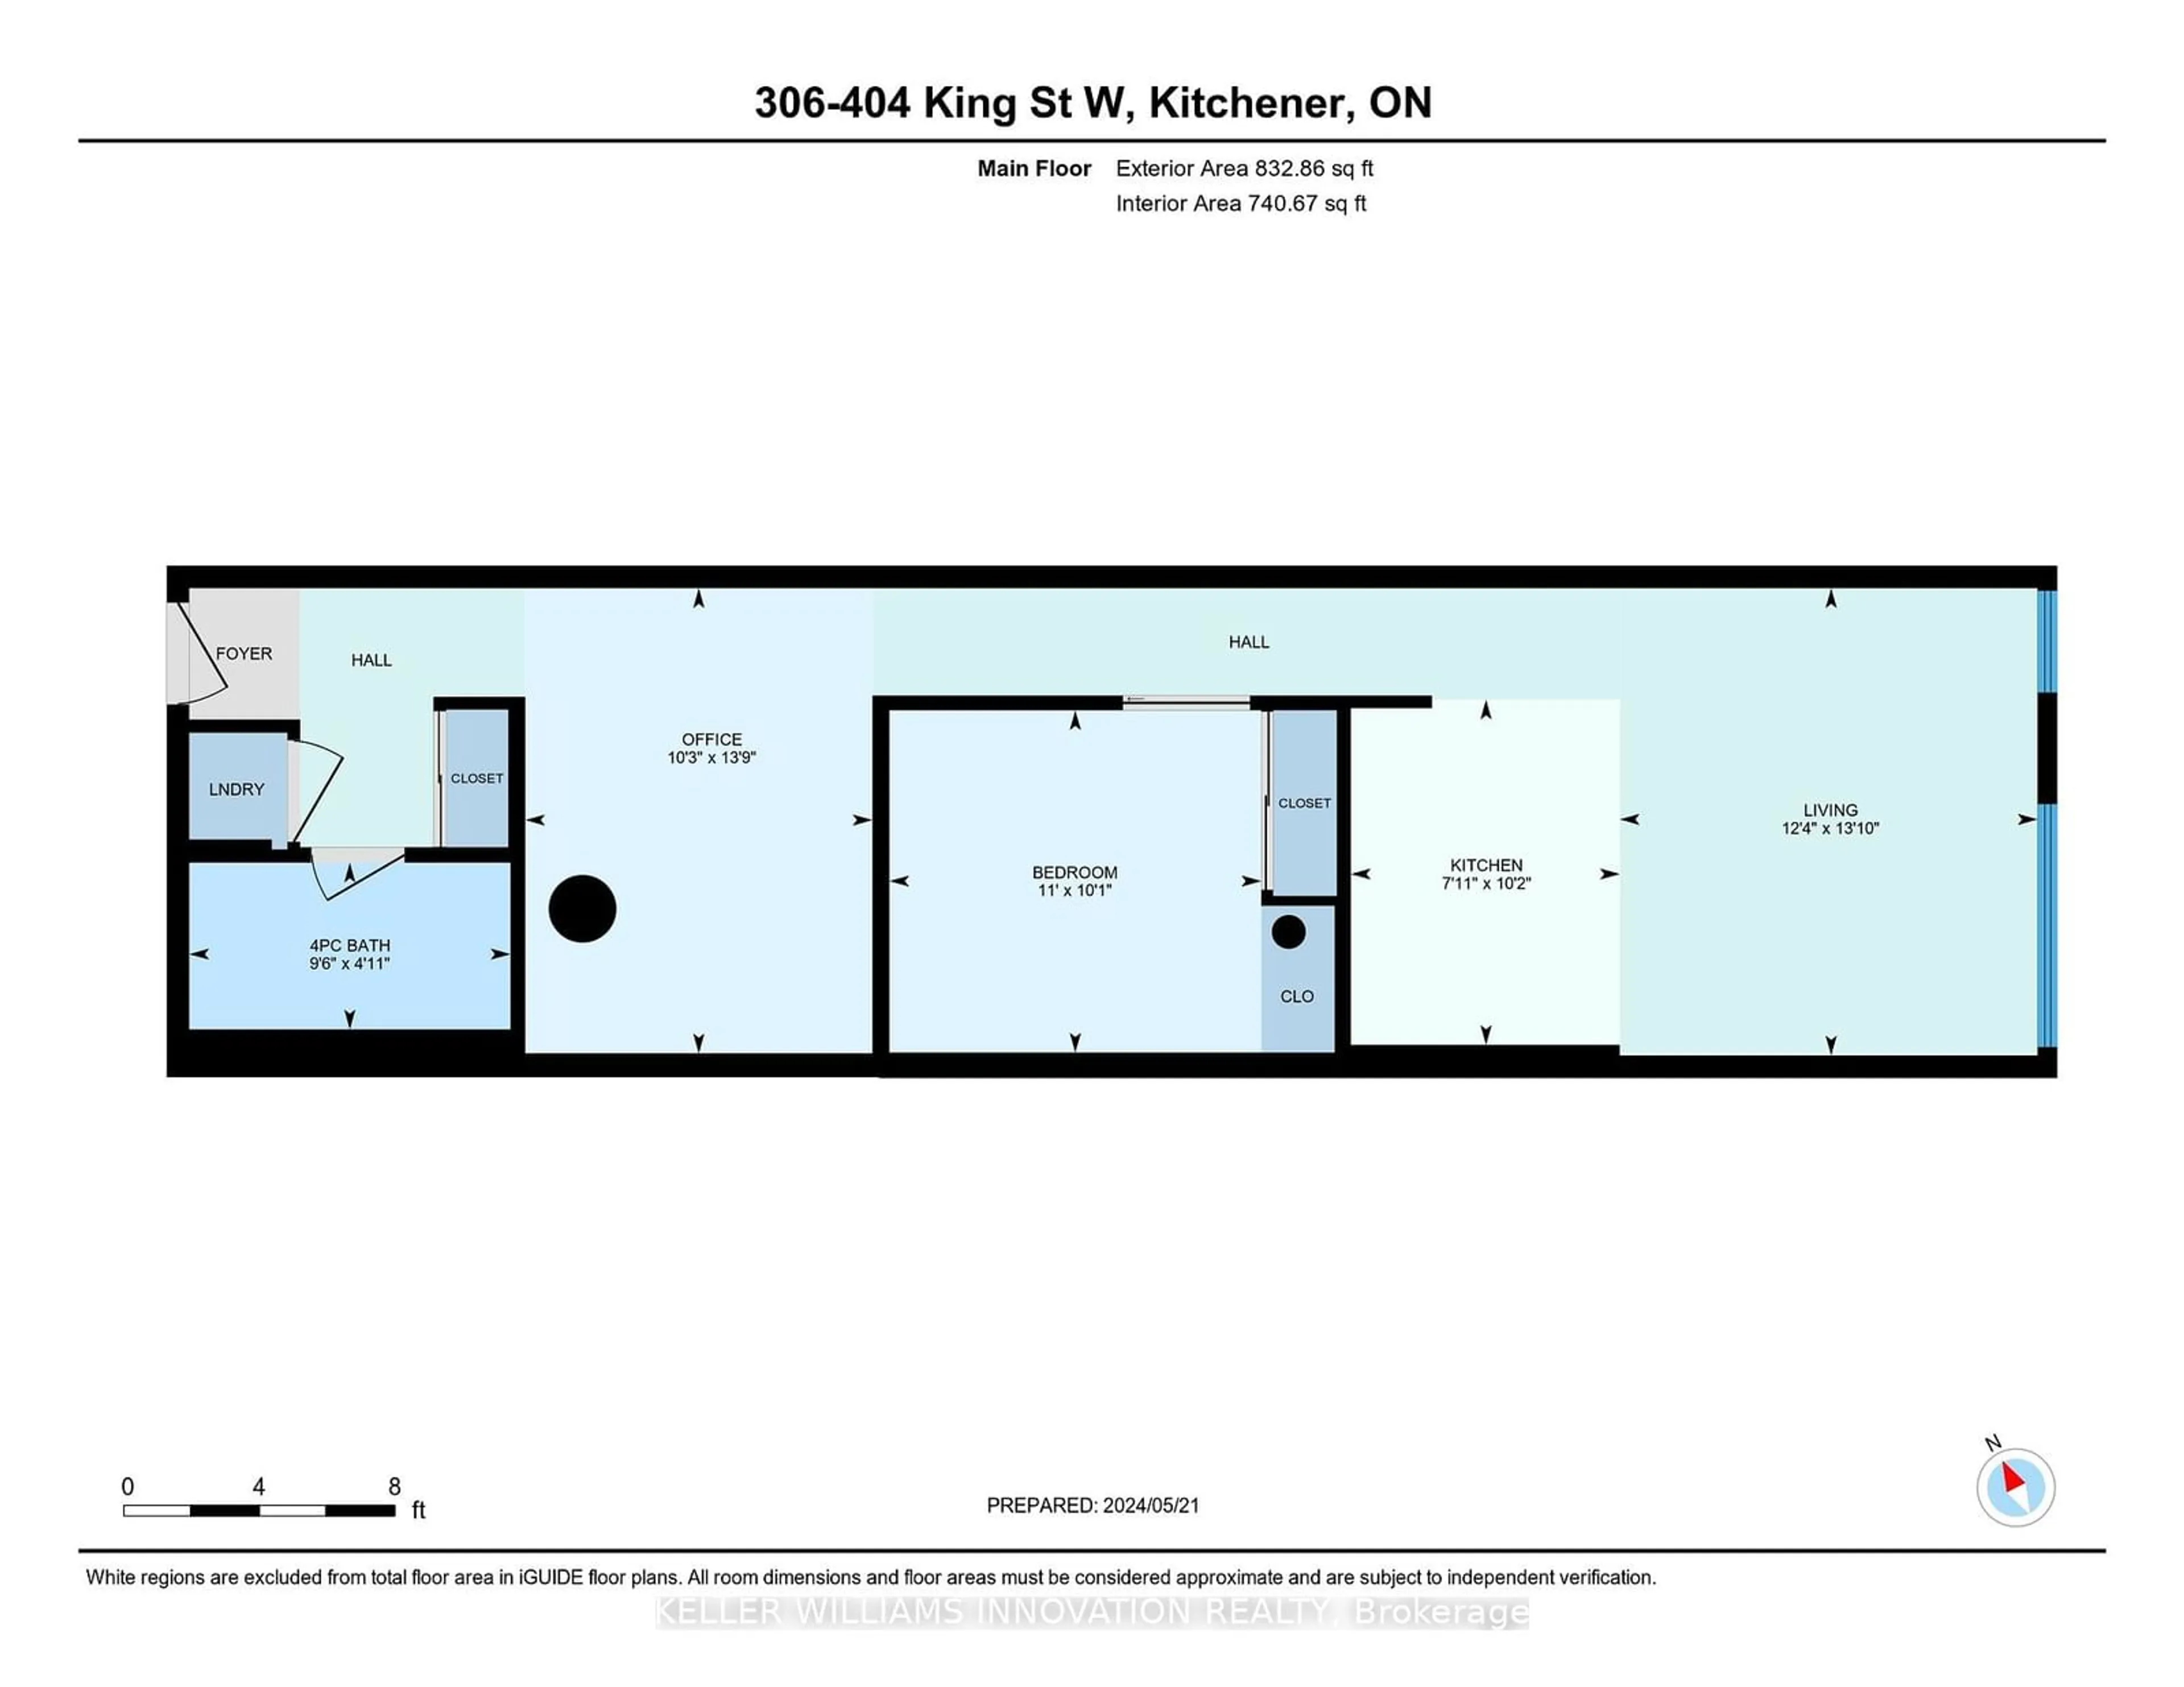 Floor plan for 404 King Street West St #306, Kitchener Ontario N2G 2L5